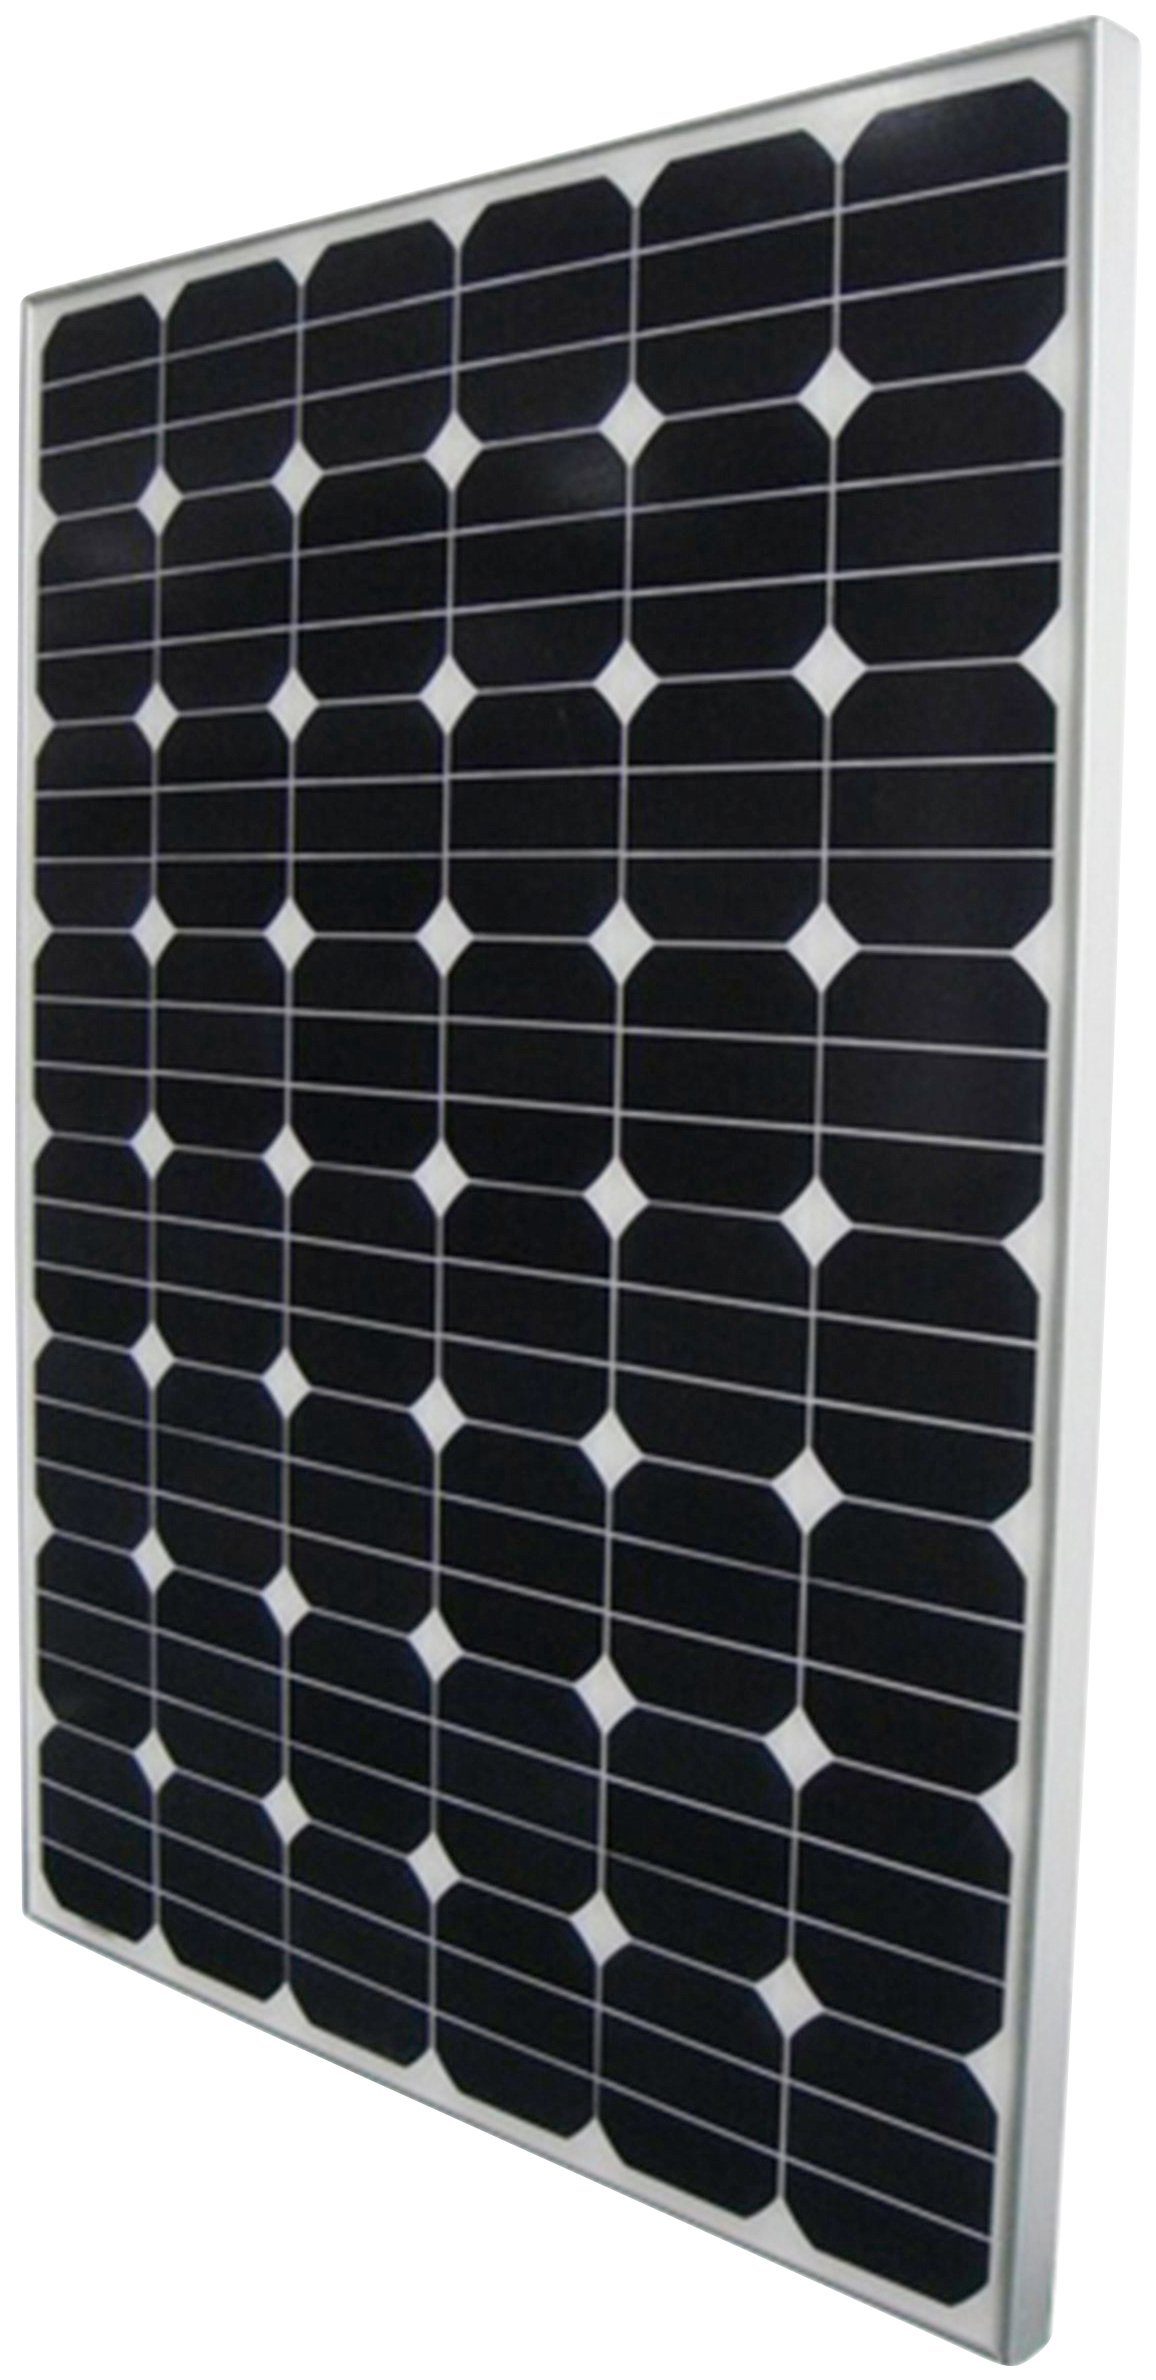 Phaesun Solarmodul Sun Peak SPR 170_24, 170 W, 24 VDC, IP65 Schutz